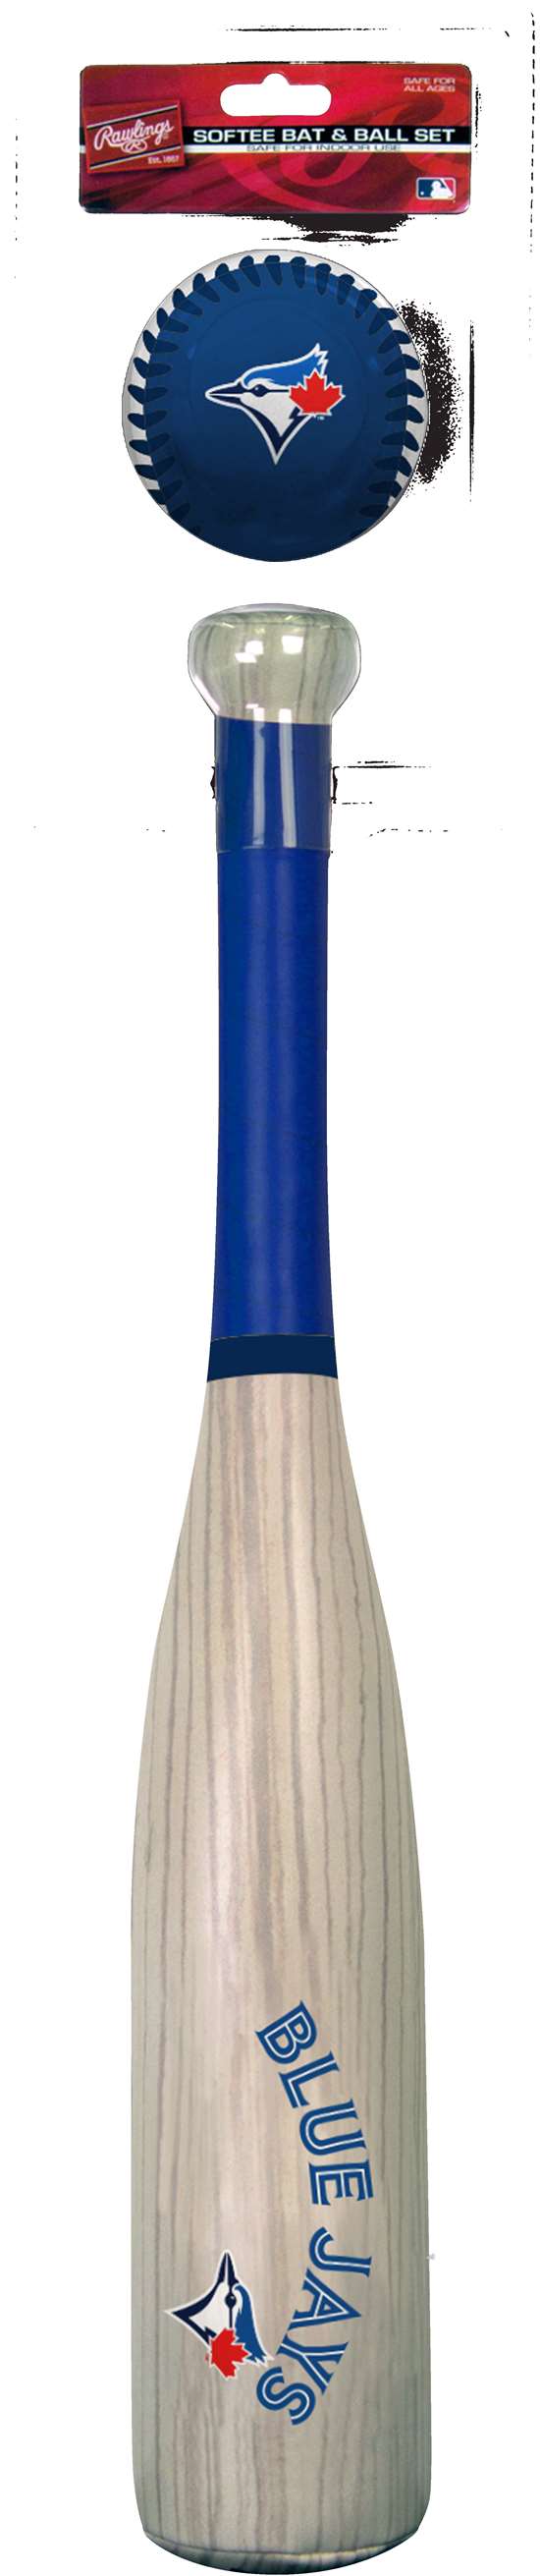 MLB Toronto Blue Jays Grand Slam Softee Baseball Bat and Ball Set (Wood Grain)